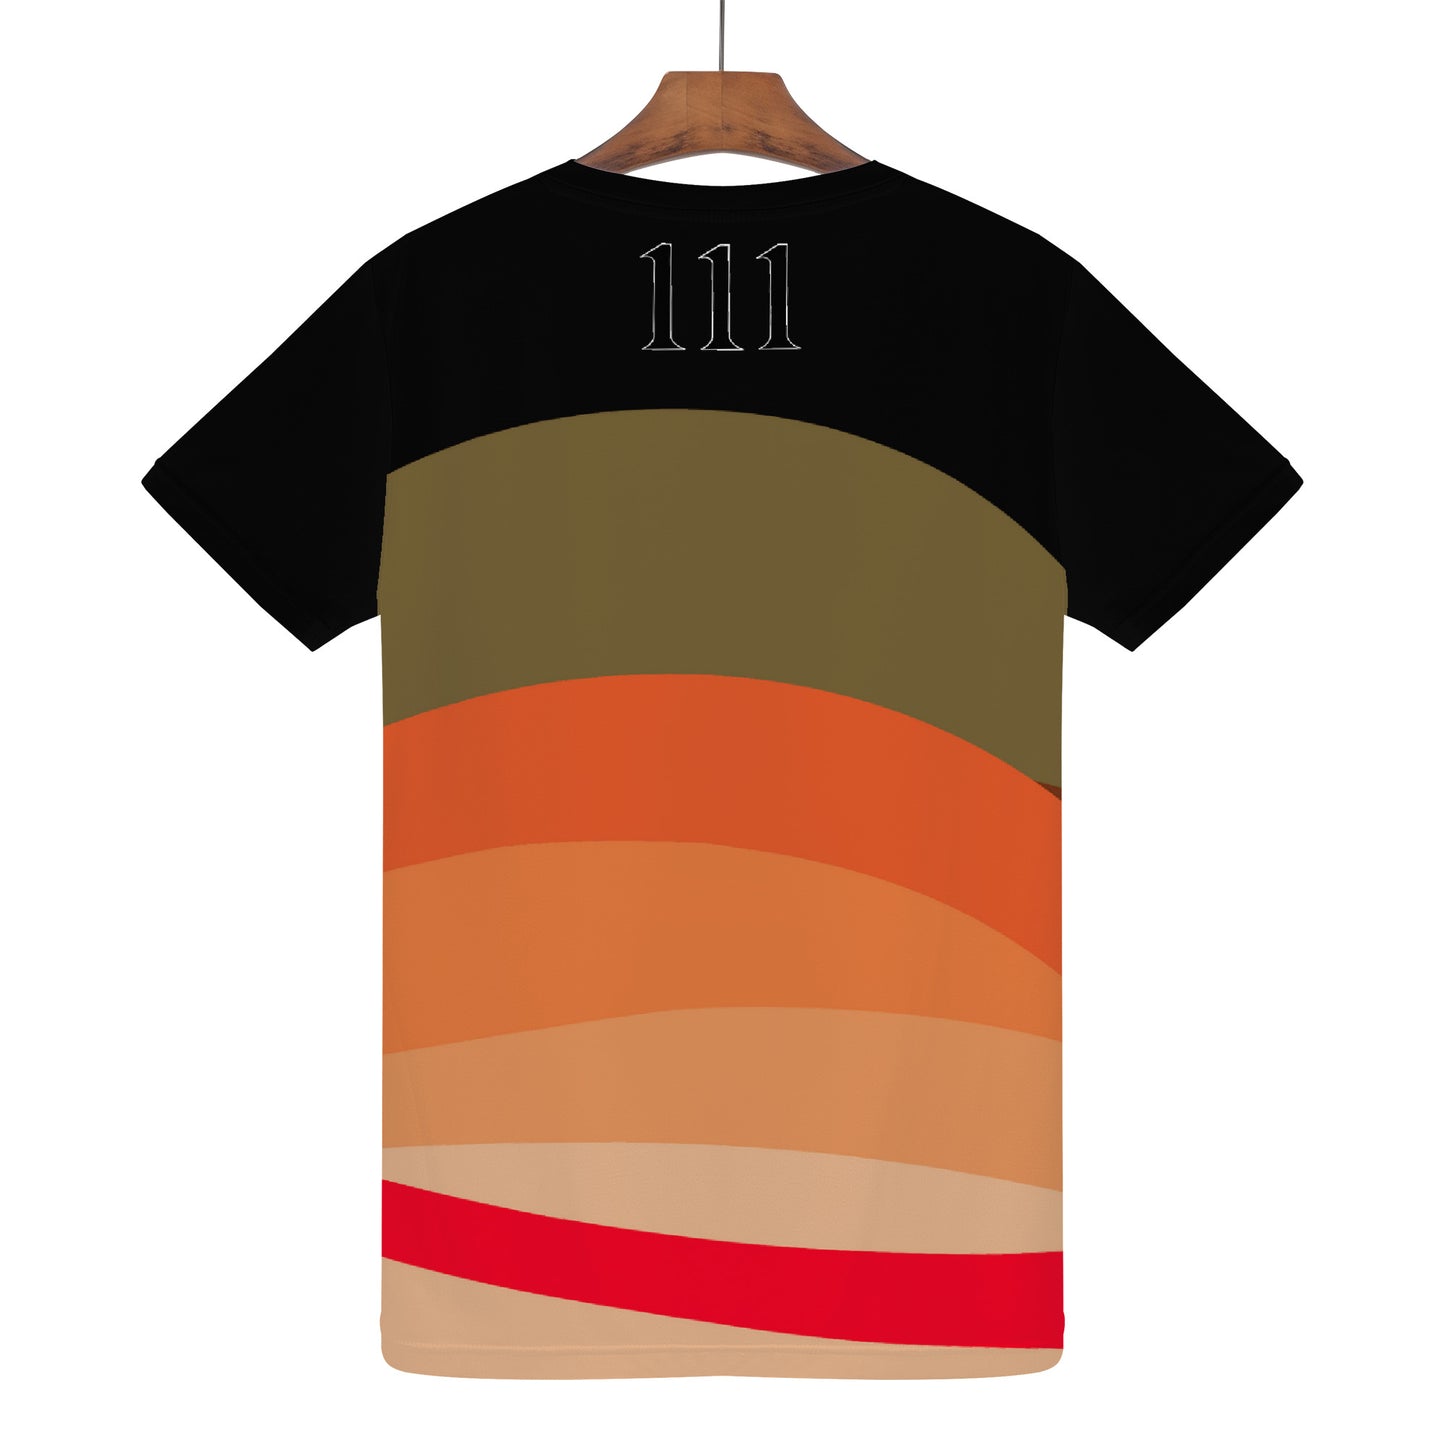 Wavy 111 Shirt (Heat Wave)